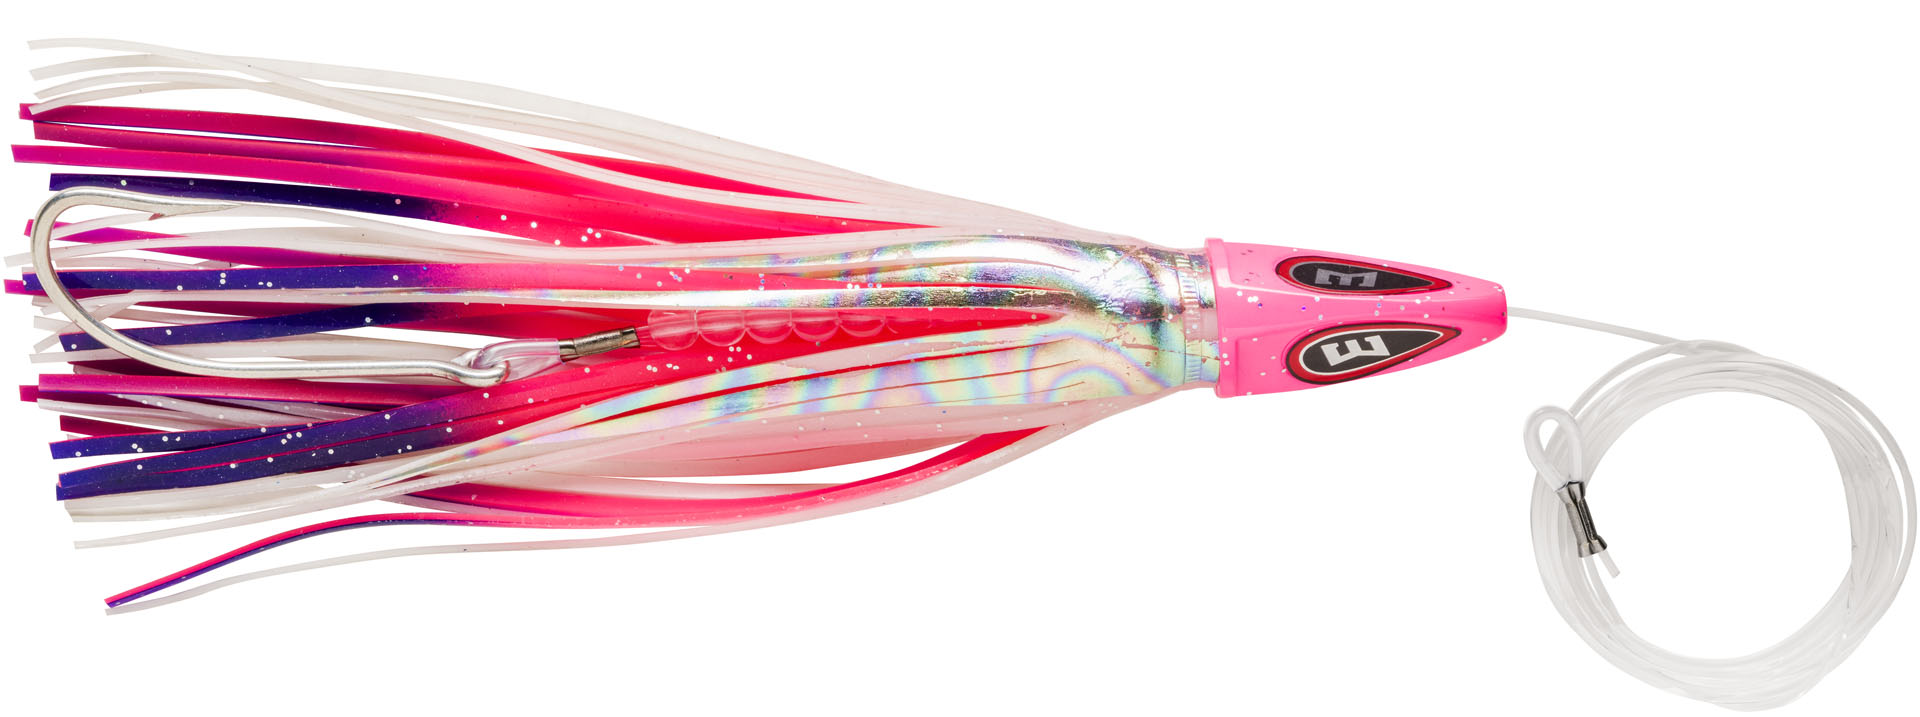 Williamson Hspeed Tuna Catcher Zeevis Rig 19cm (99g) - Candy floss